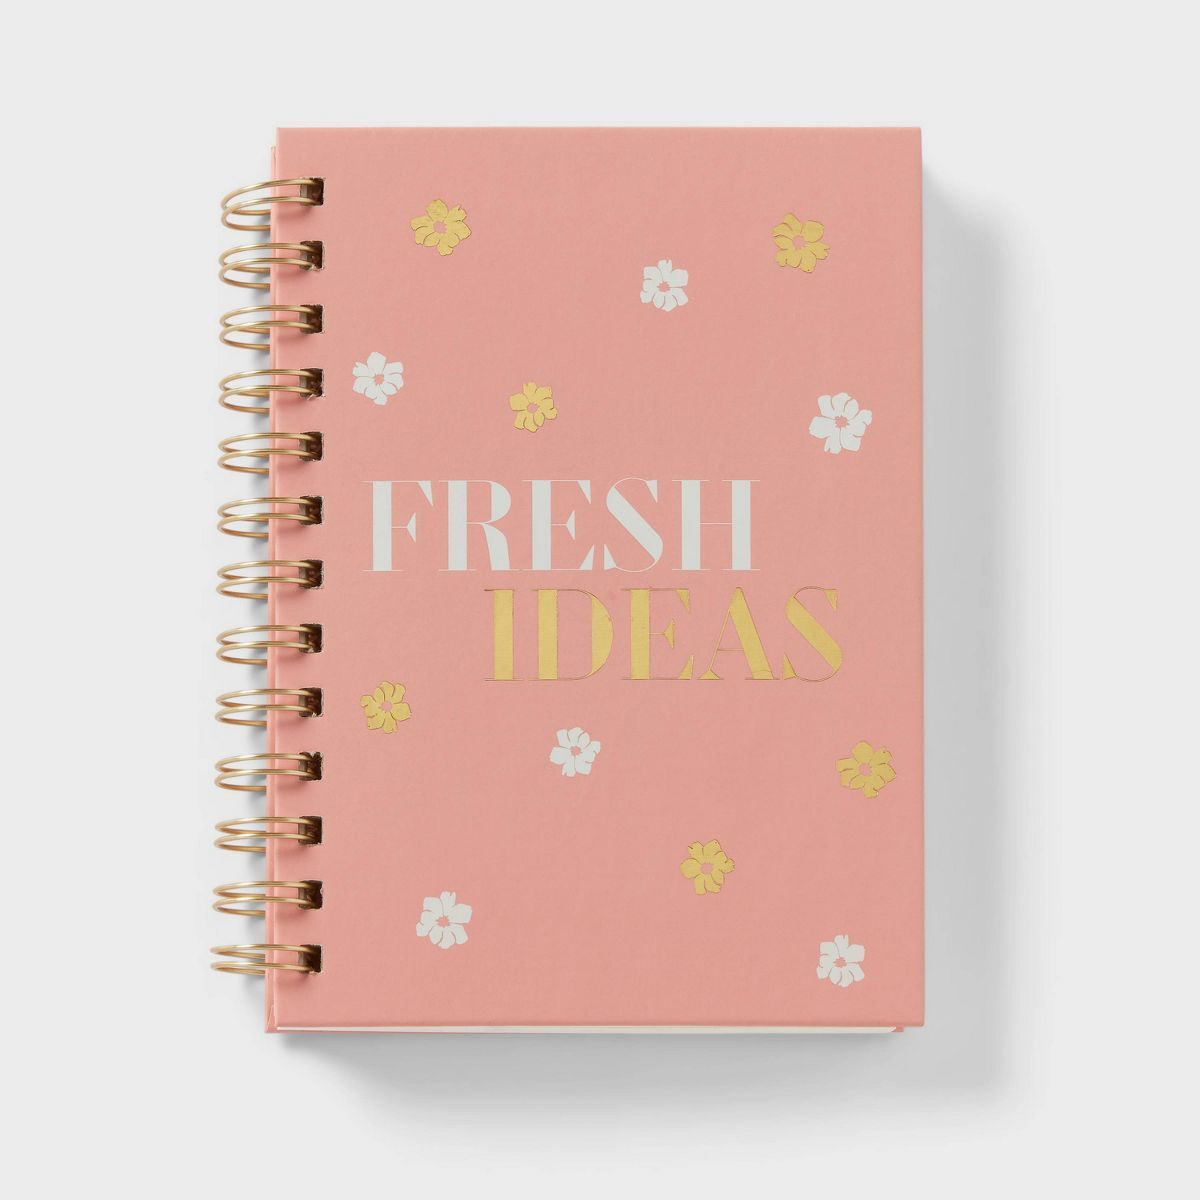 192pg Ruled Spiral Notebook 7"x5.5" Fresh Ideas Pink - Opalhouse™ | Target